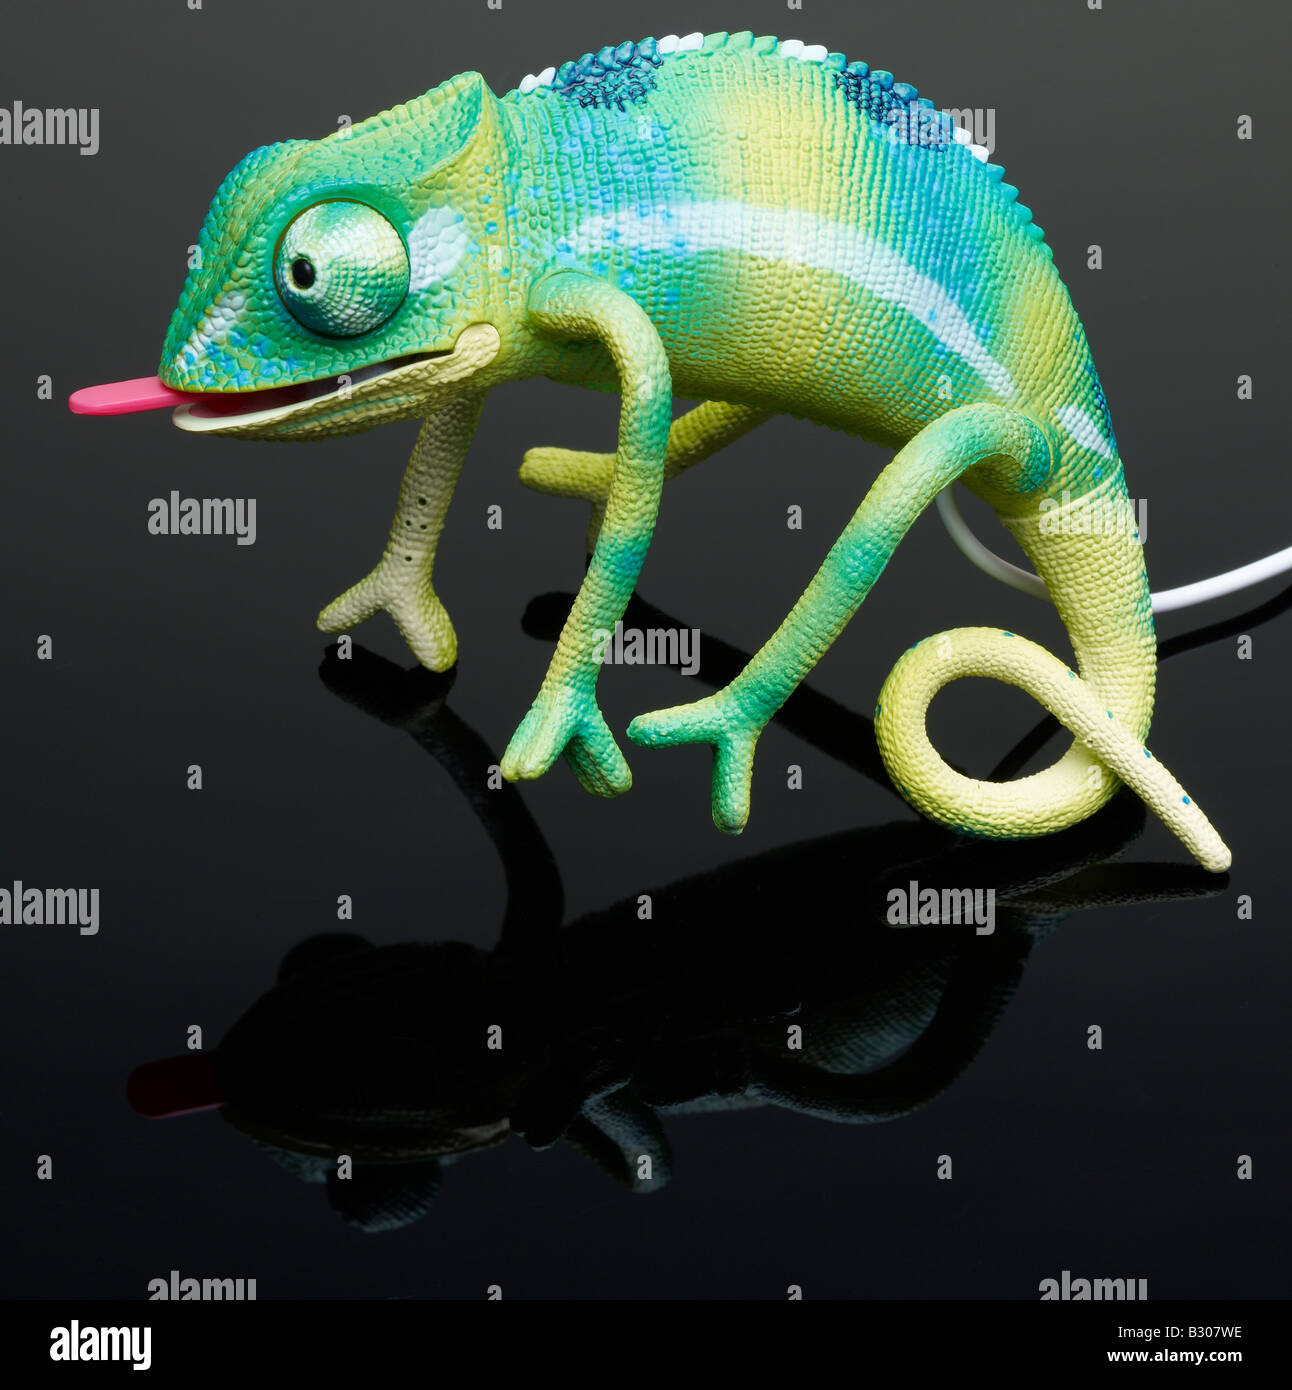 Chameleon toy Stock Photo